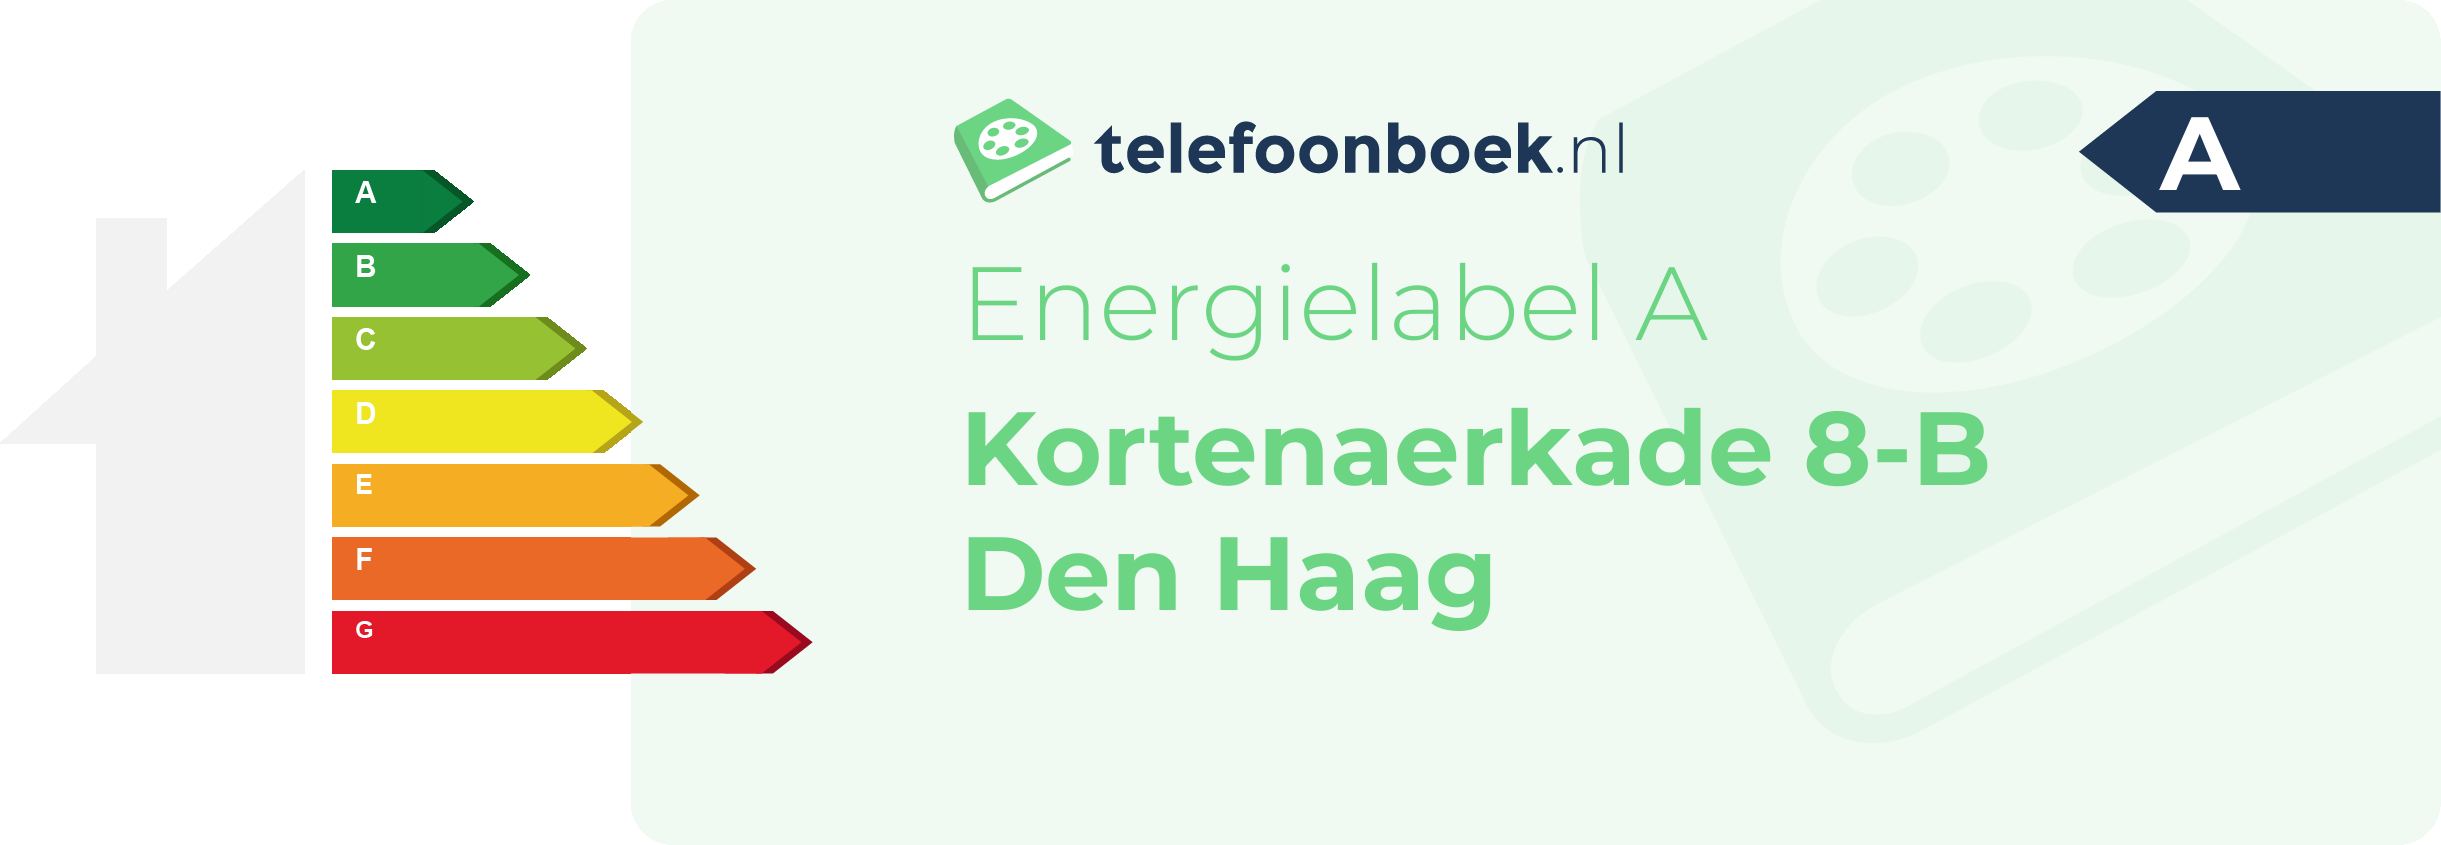 Energielabel Kortenaerkade 8-B Den Haag